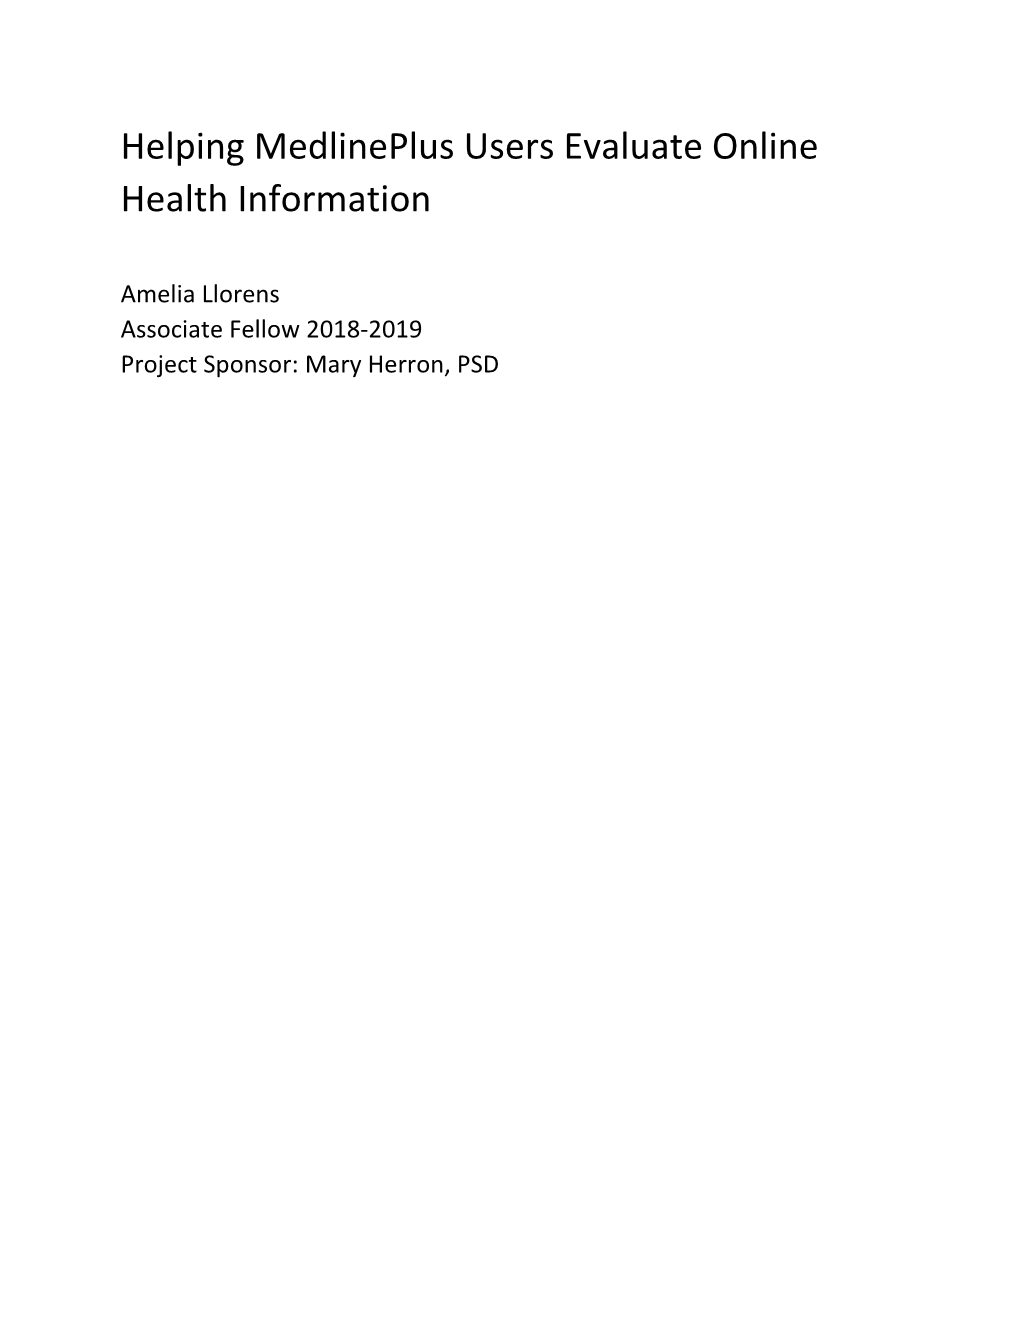 Helping Medlineplus Users Evaluate Online Health Information